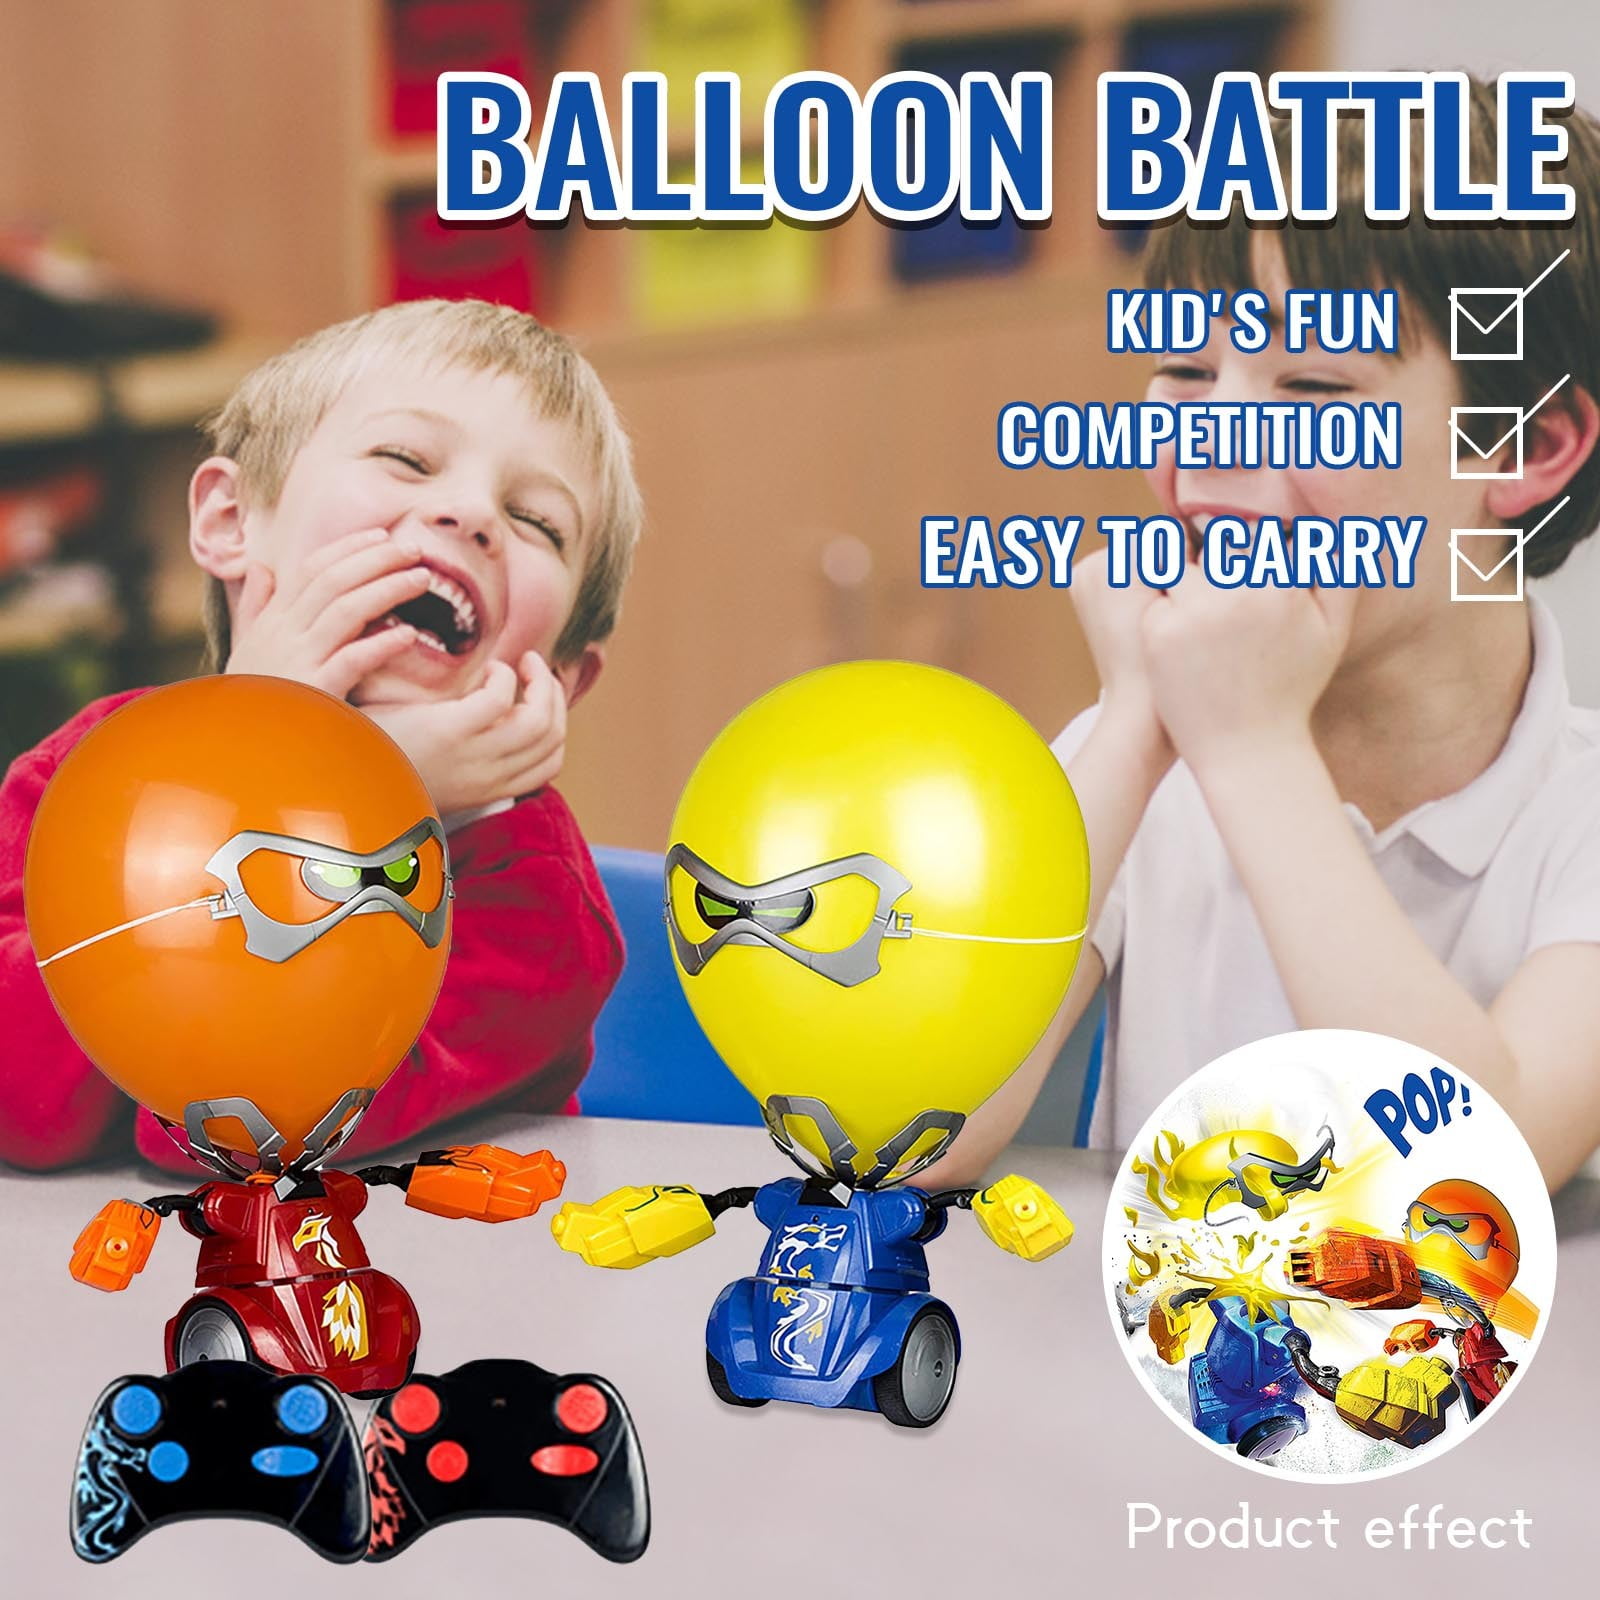 Robo Combat Balloon